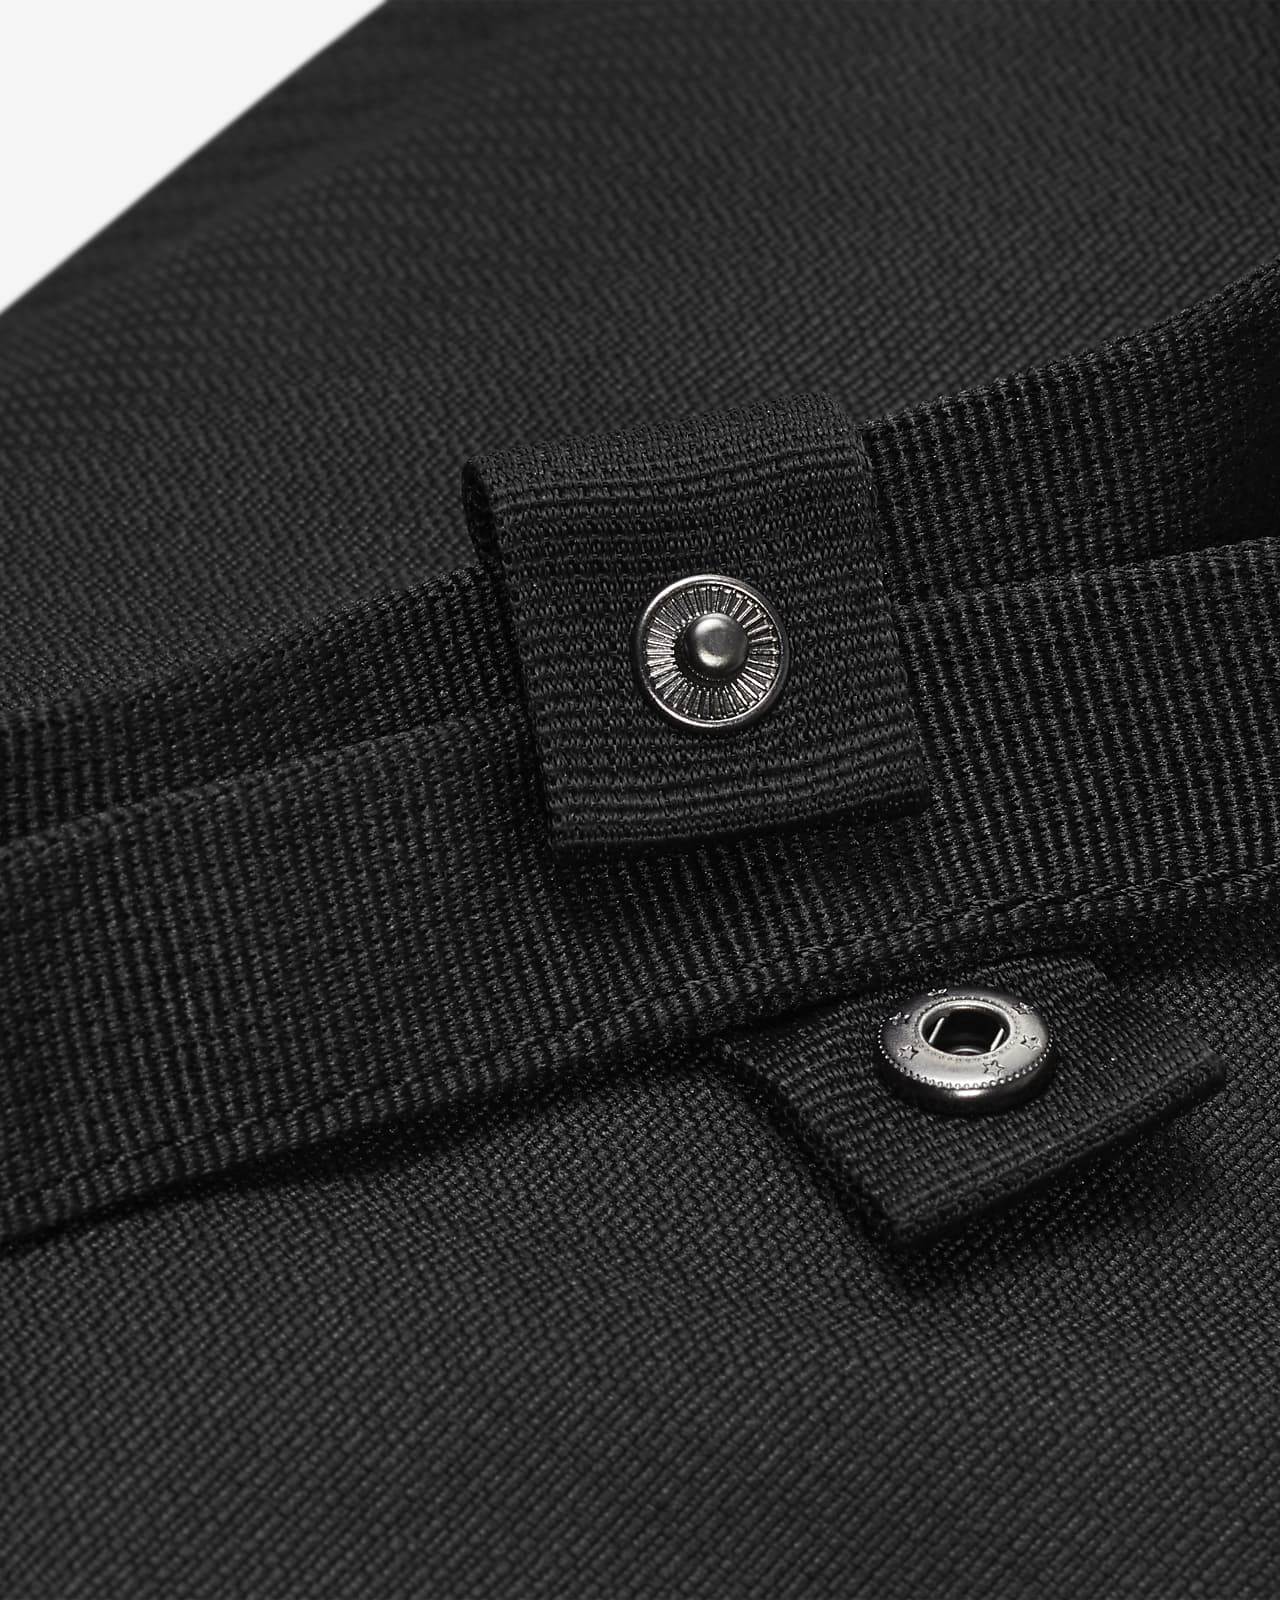 Buy Nike Black Brasilia 9.5 Training Duffel Bag (Extra Small, 25L) from  Next Austria